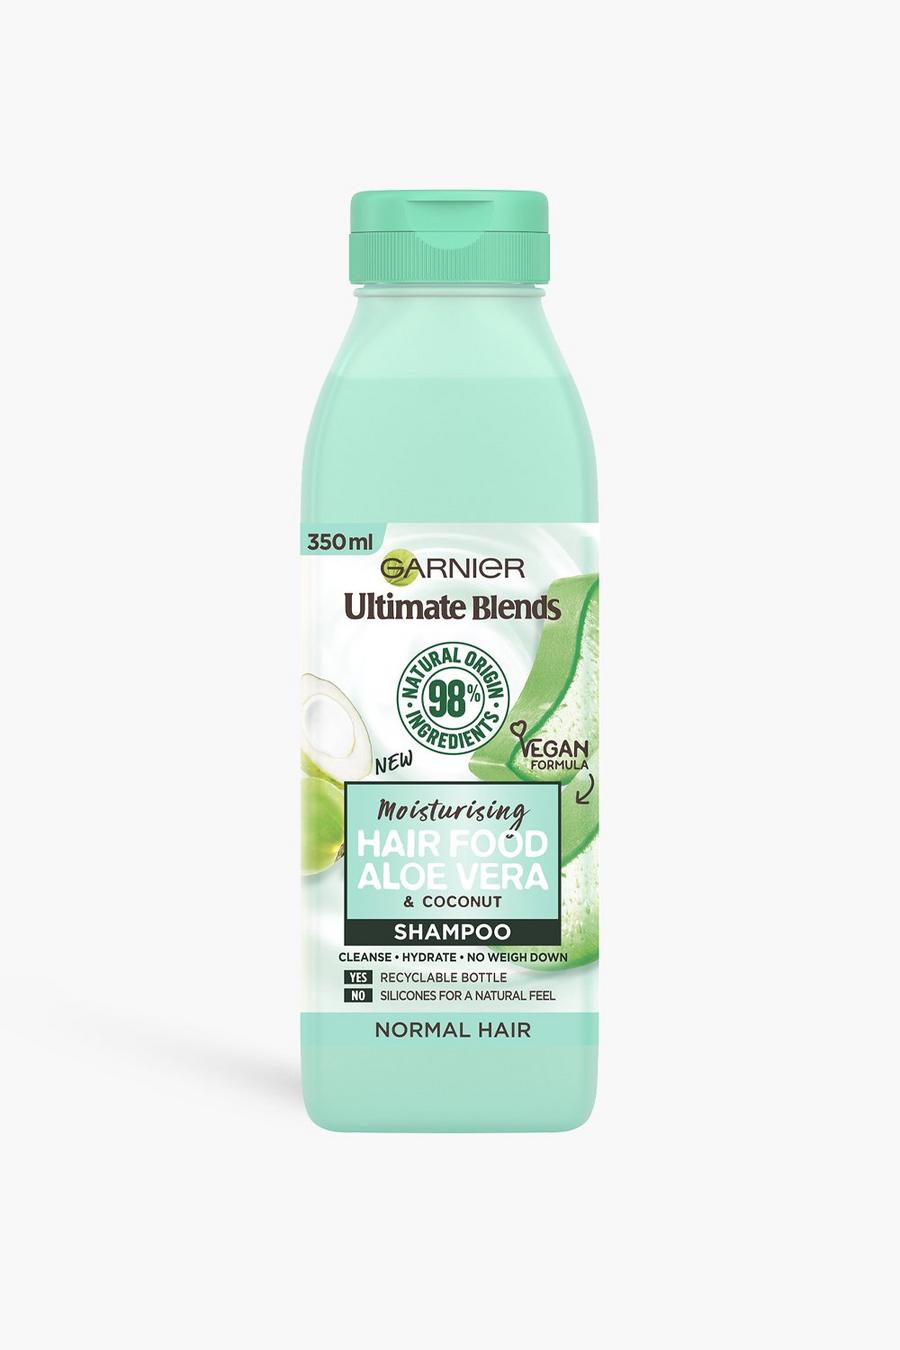 Green vert Garnier Ultimate Blends Moisturising Hair Food Aloe Vera Shampoo for Normal Hair 350ml